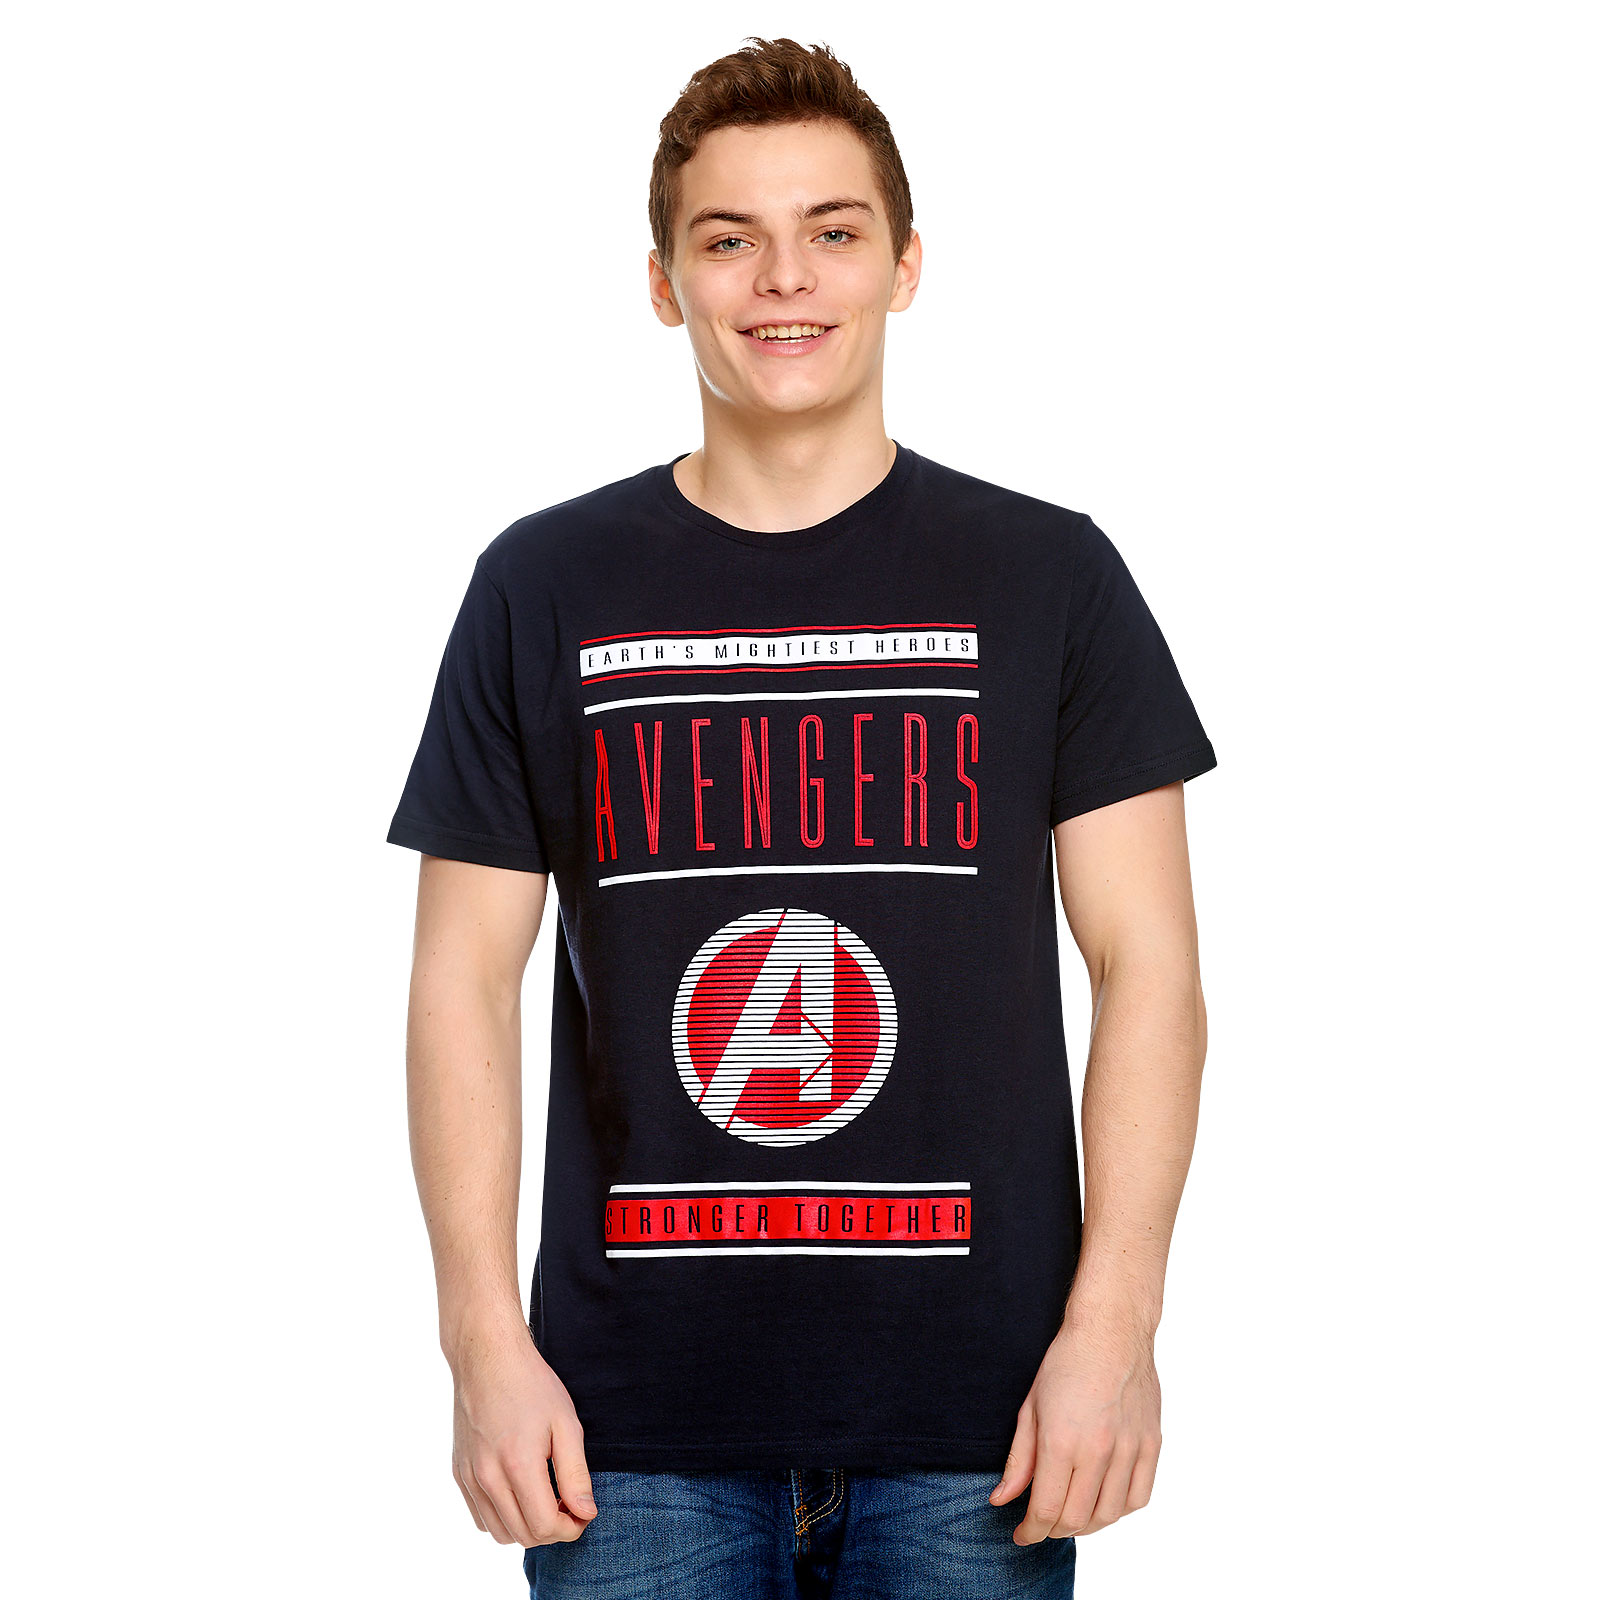 Avengers - Stronger Together T-Shirt blau